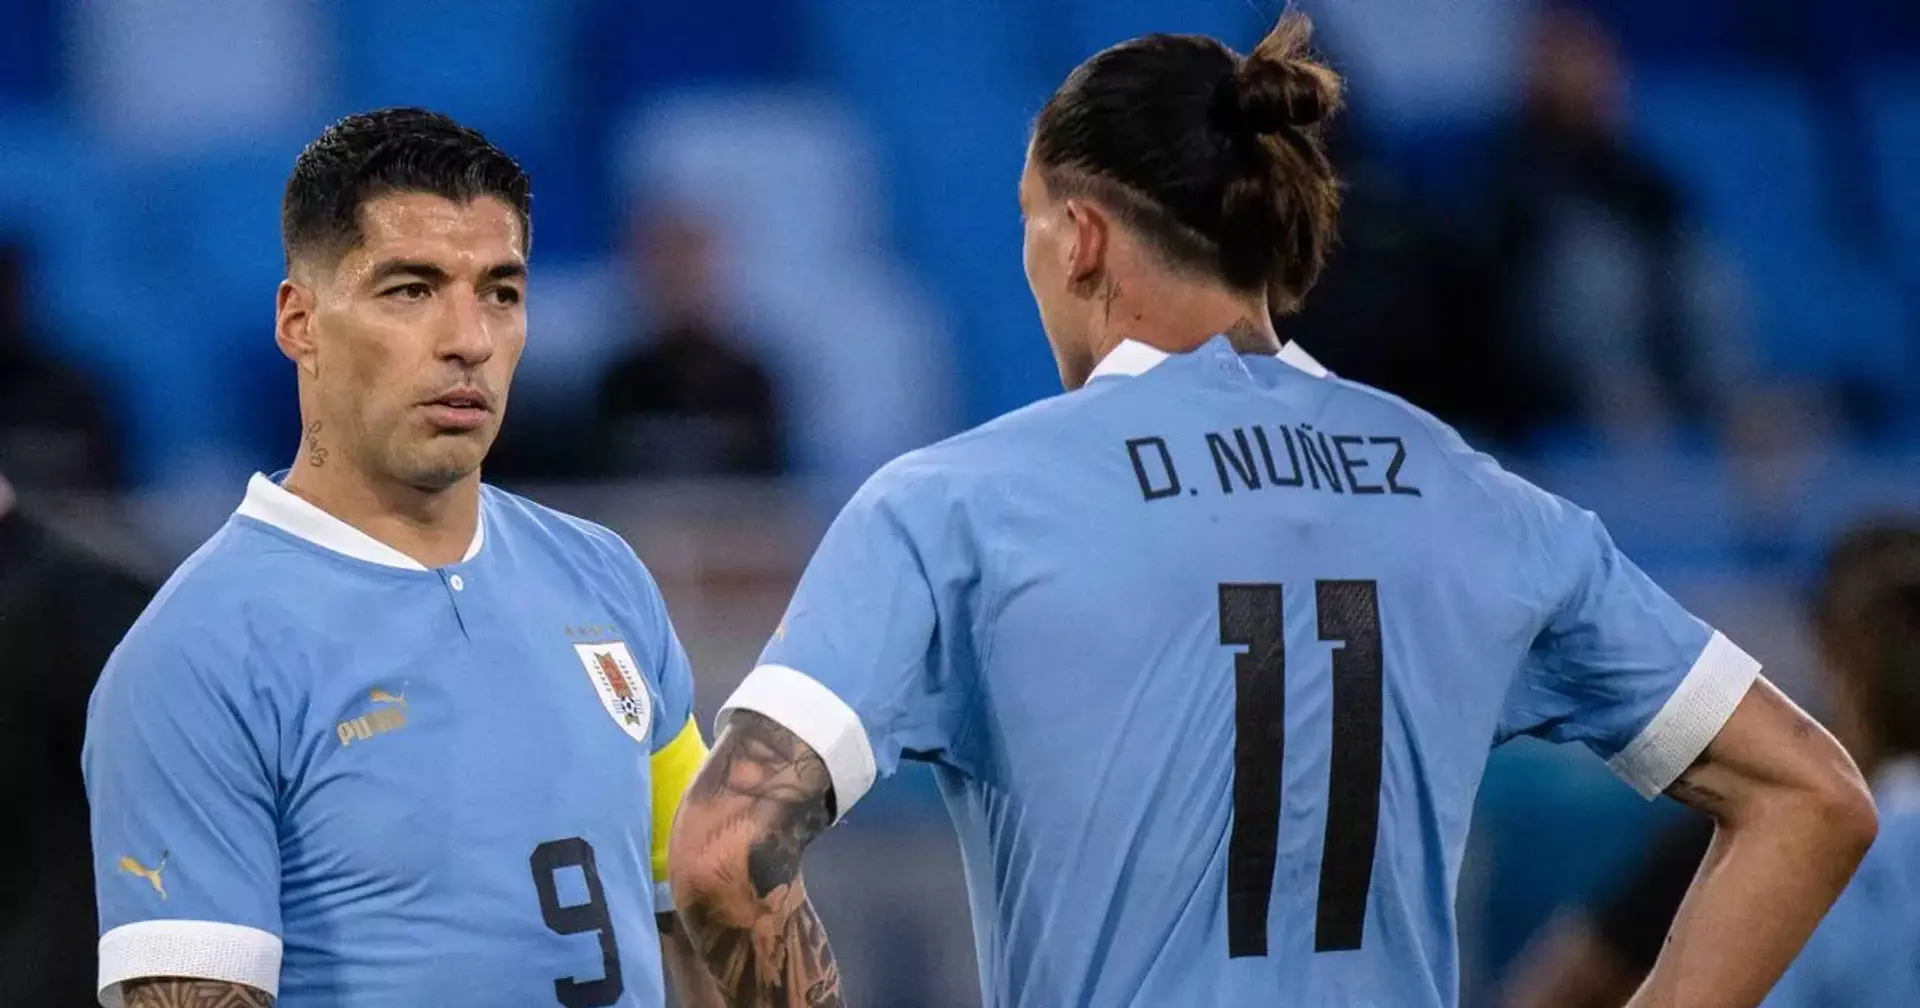 Luis Suarez sends 'positive' message to Darwin Nunez after social media controversy